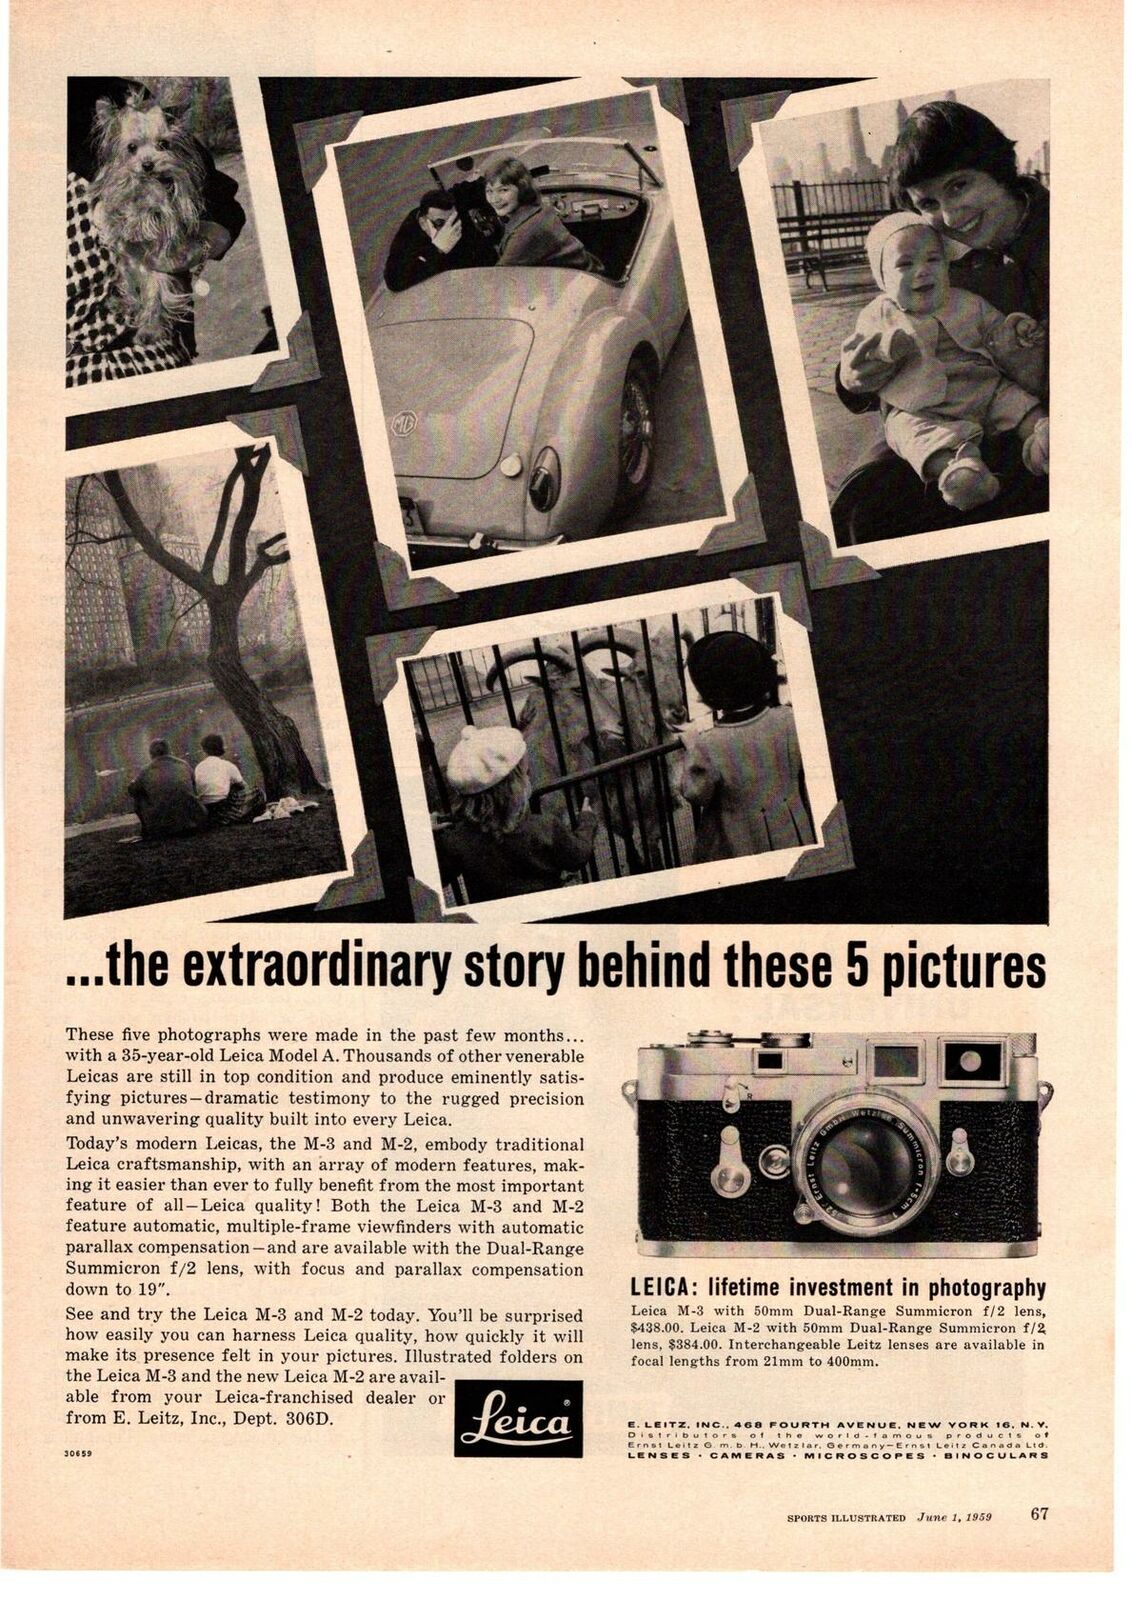 1959 Leica M-3 Camera 50mm Dual-Range Summicron Lens Ernst Leitz NY Print Ad